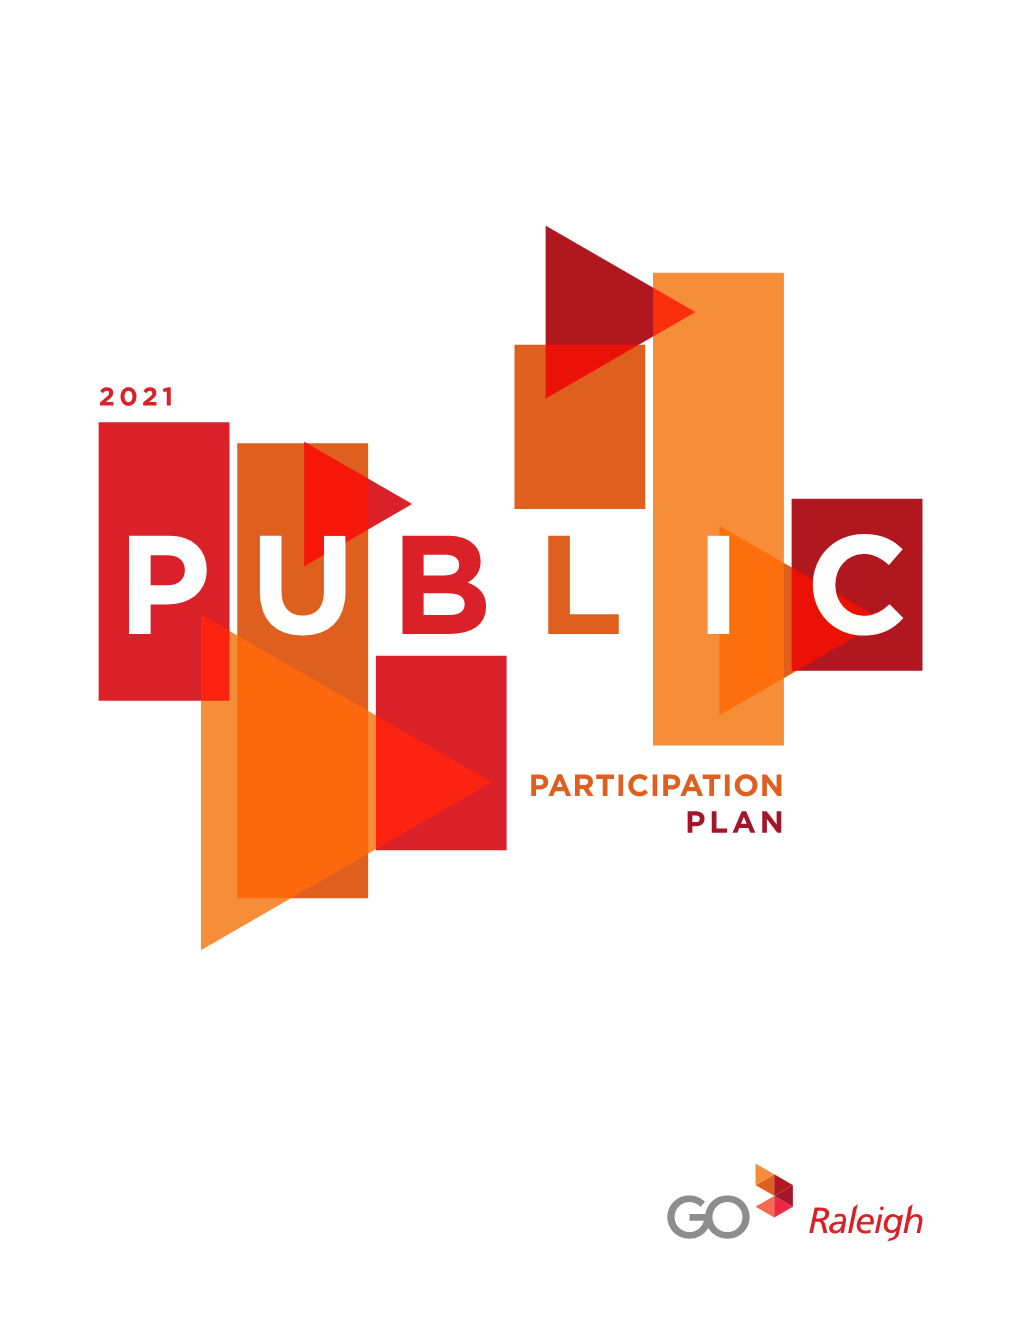 Goraleigh Public Participation Plan